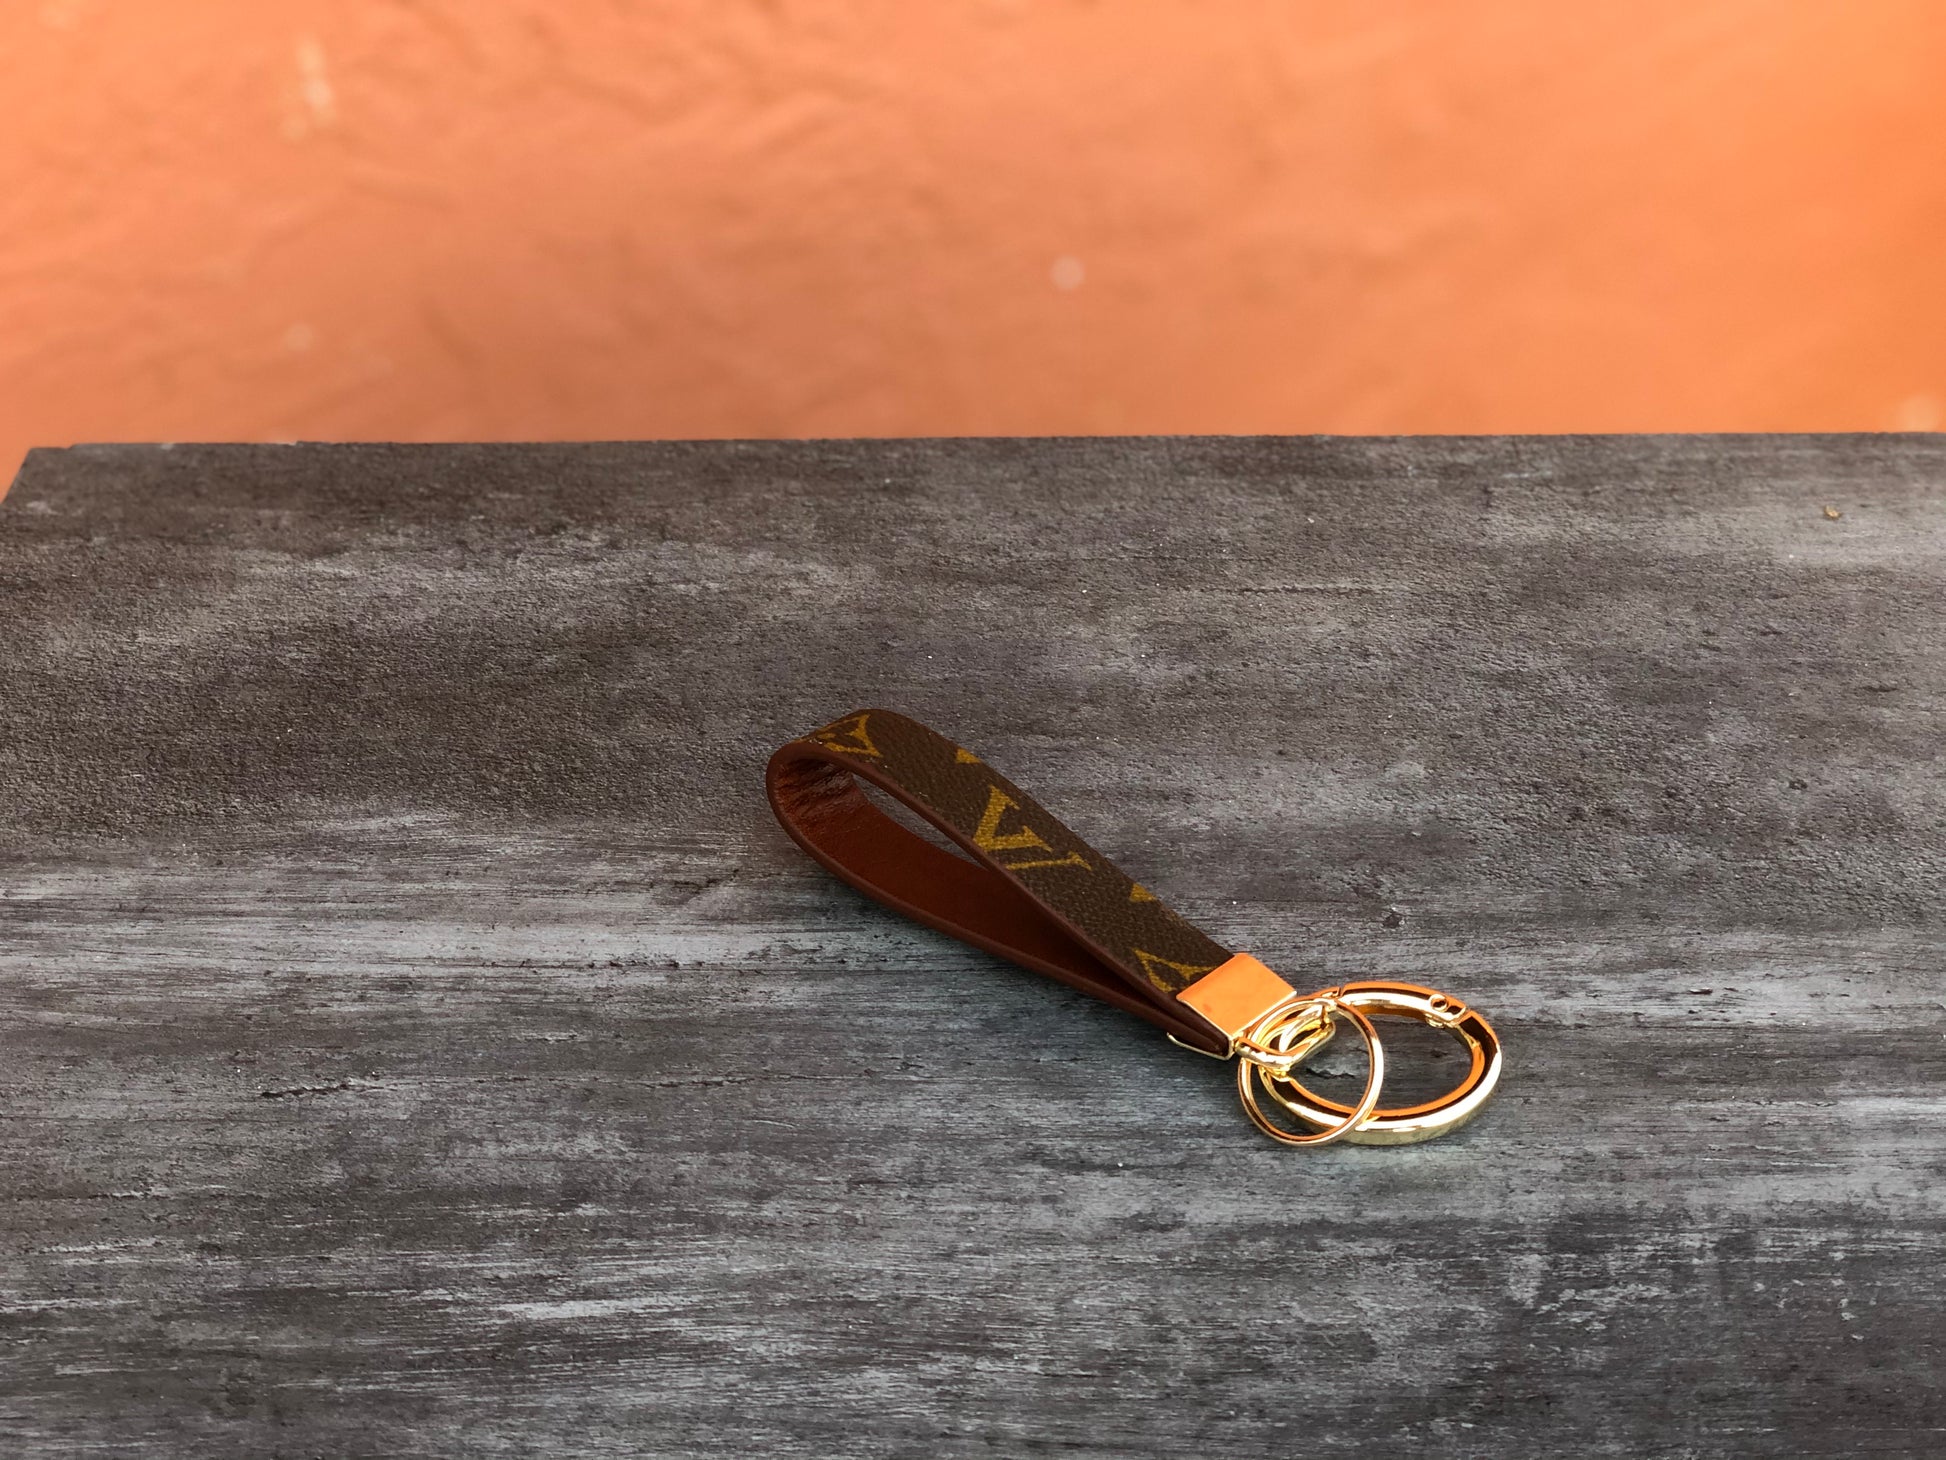 vuitton leather keychain